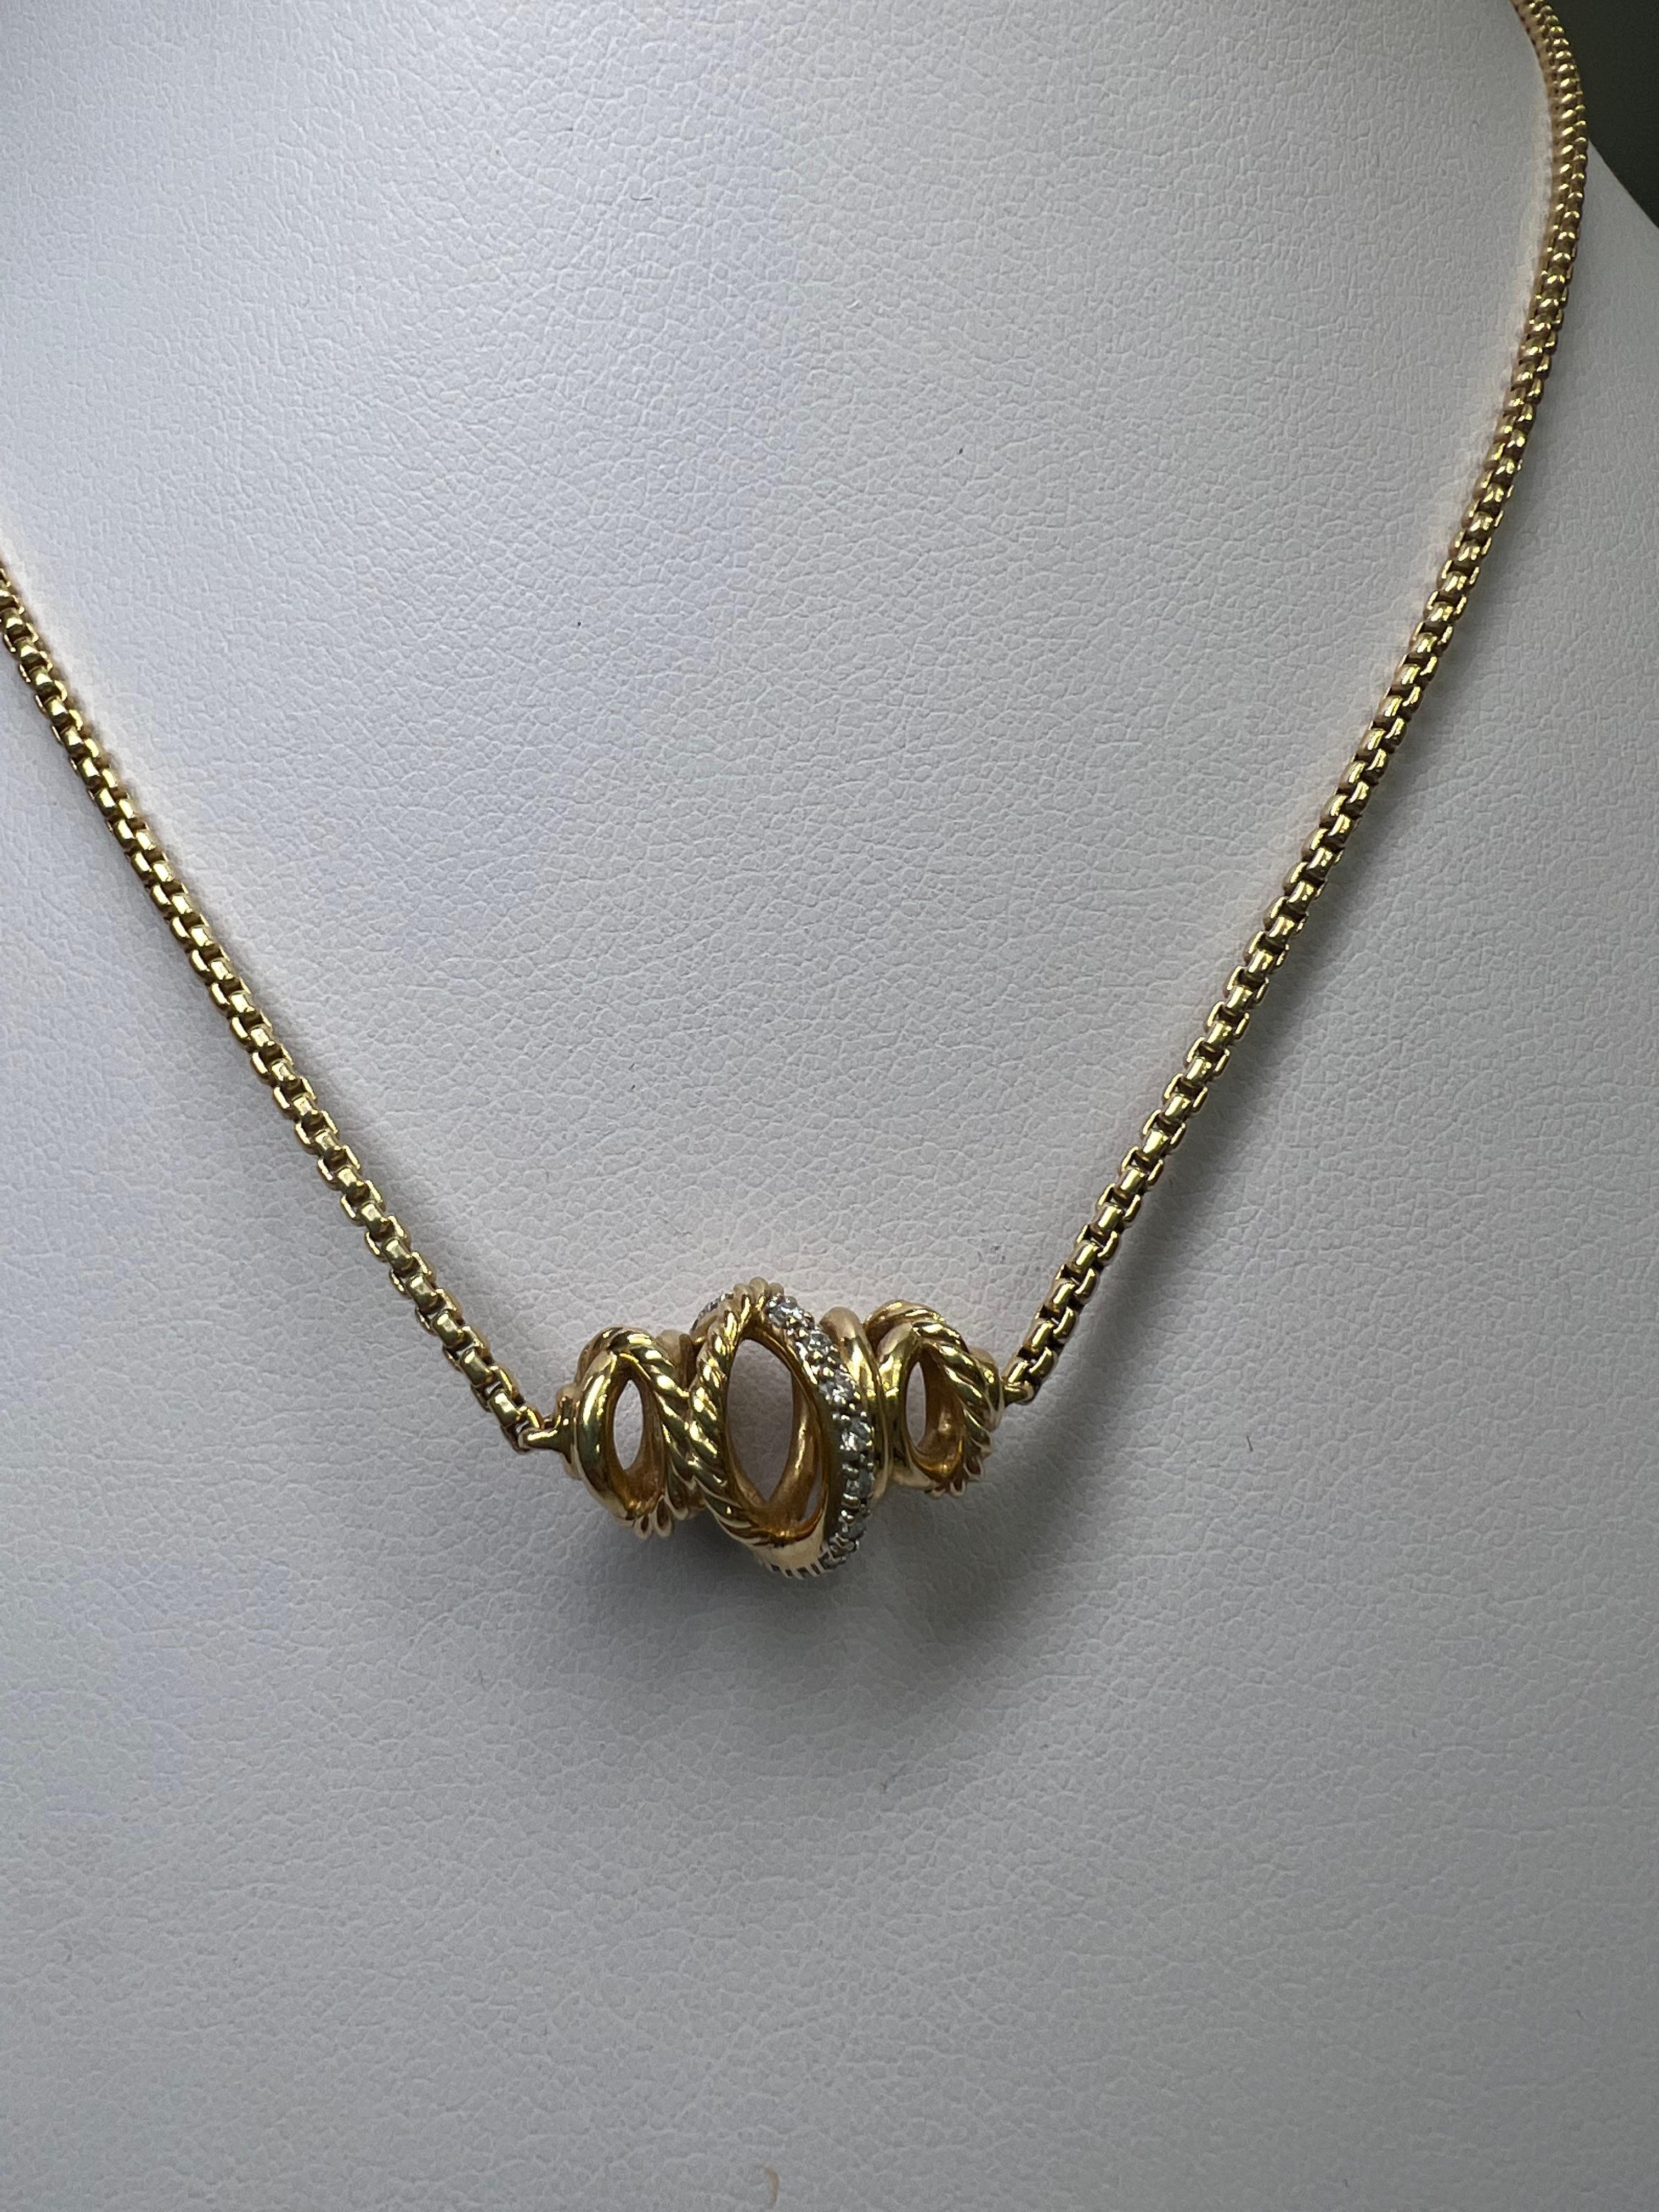 Brilliant Cut David Yurman Crossover Necklace, Diamonds and 18k Yellow Gold